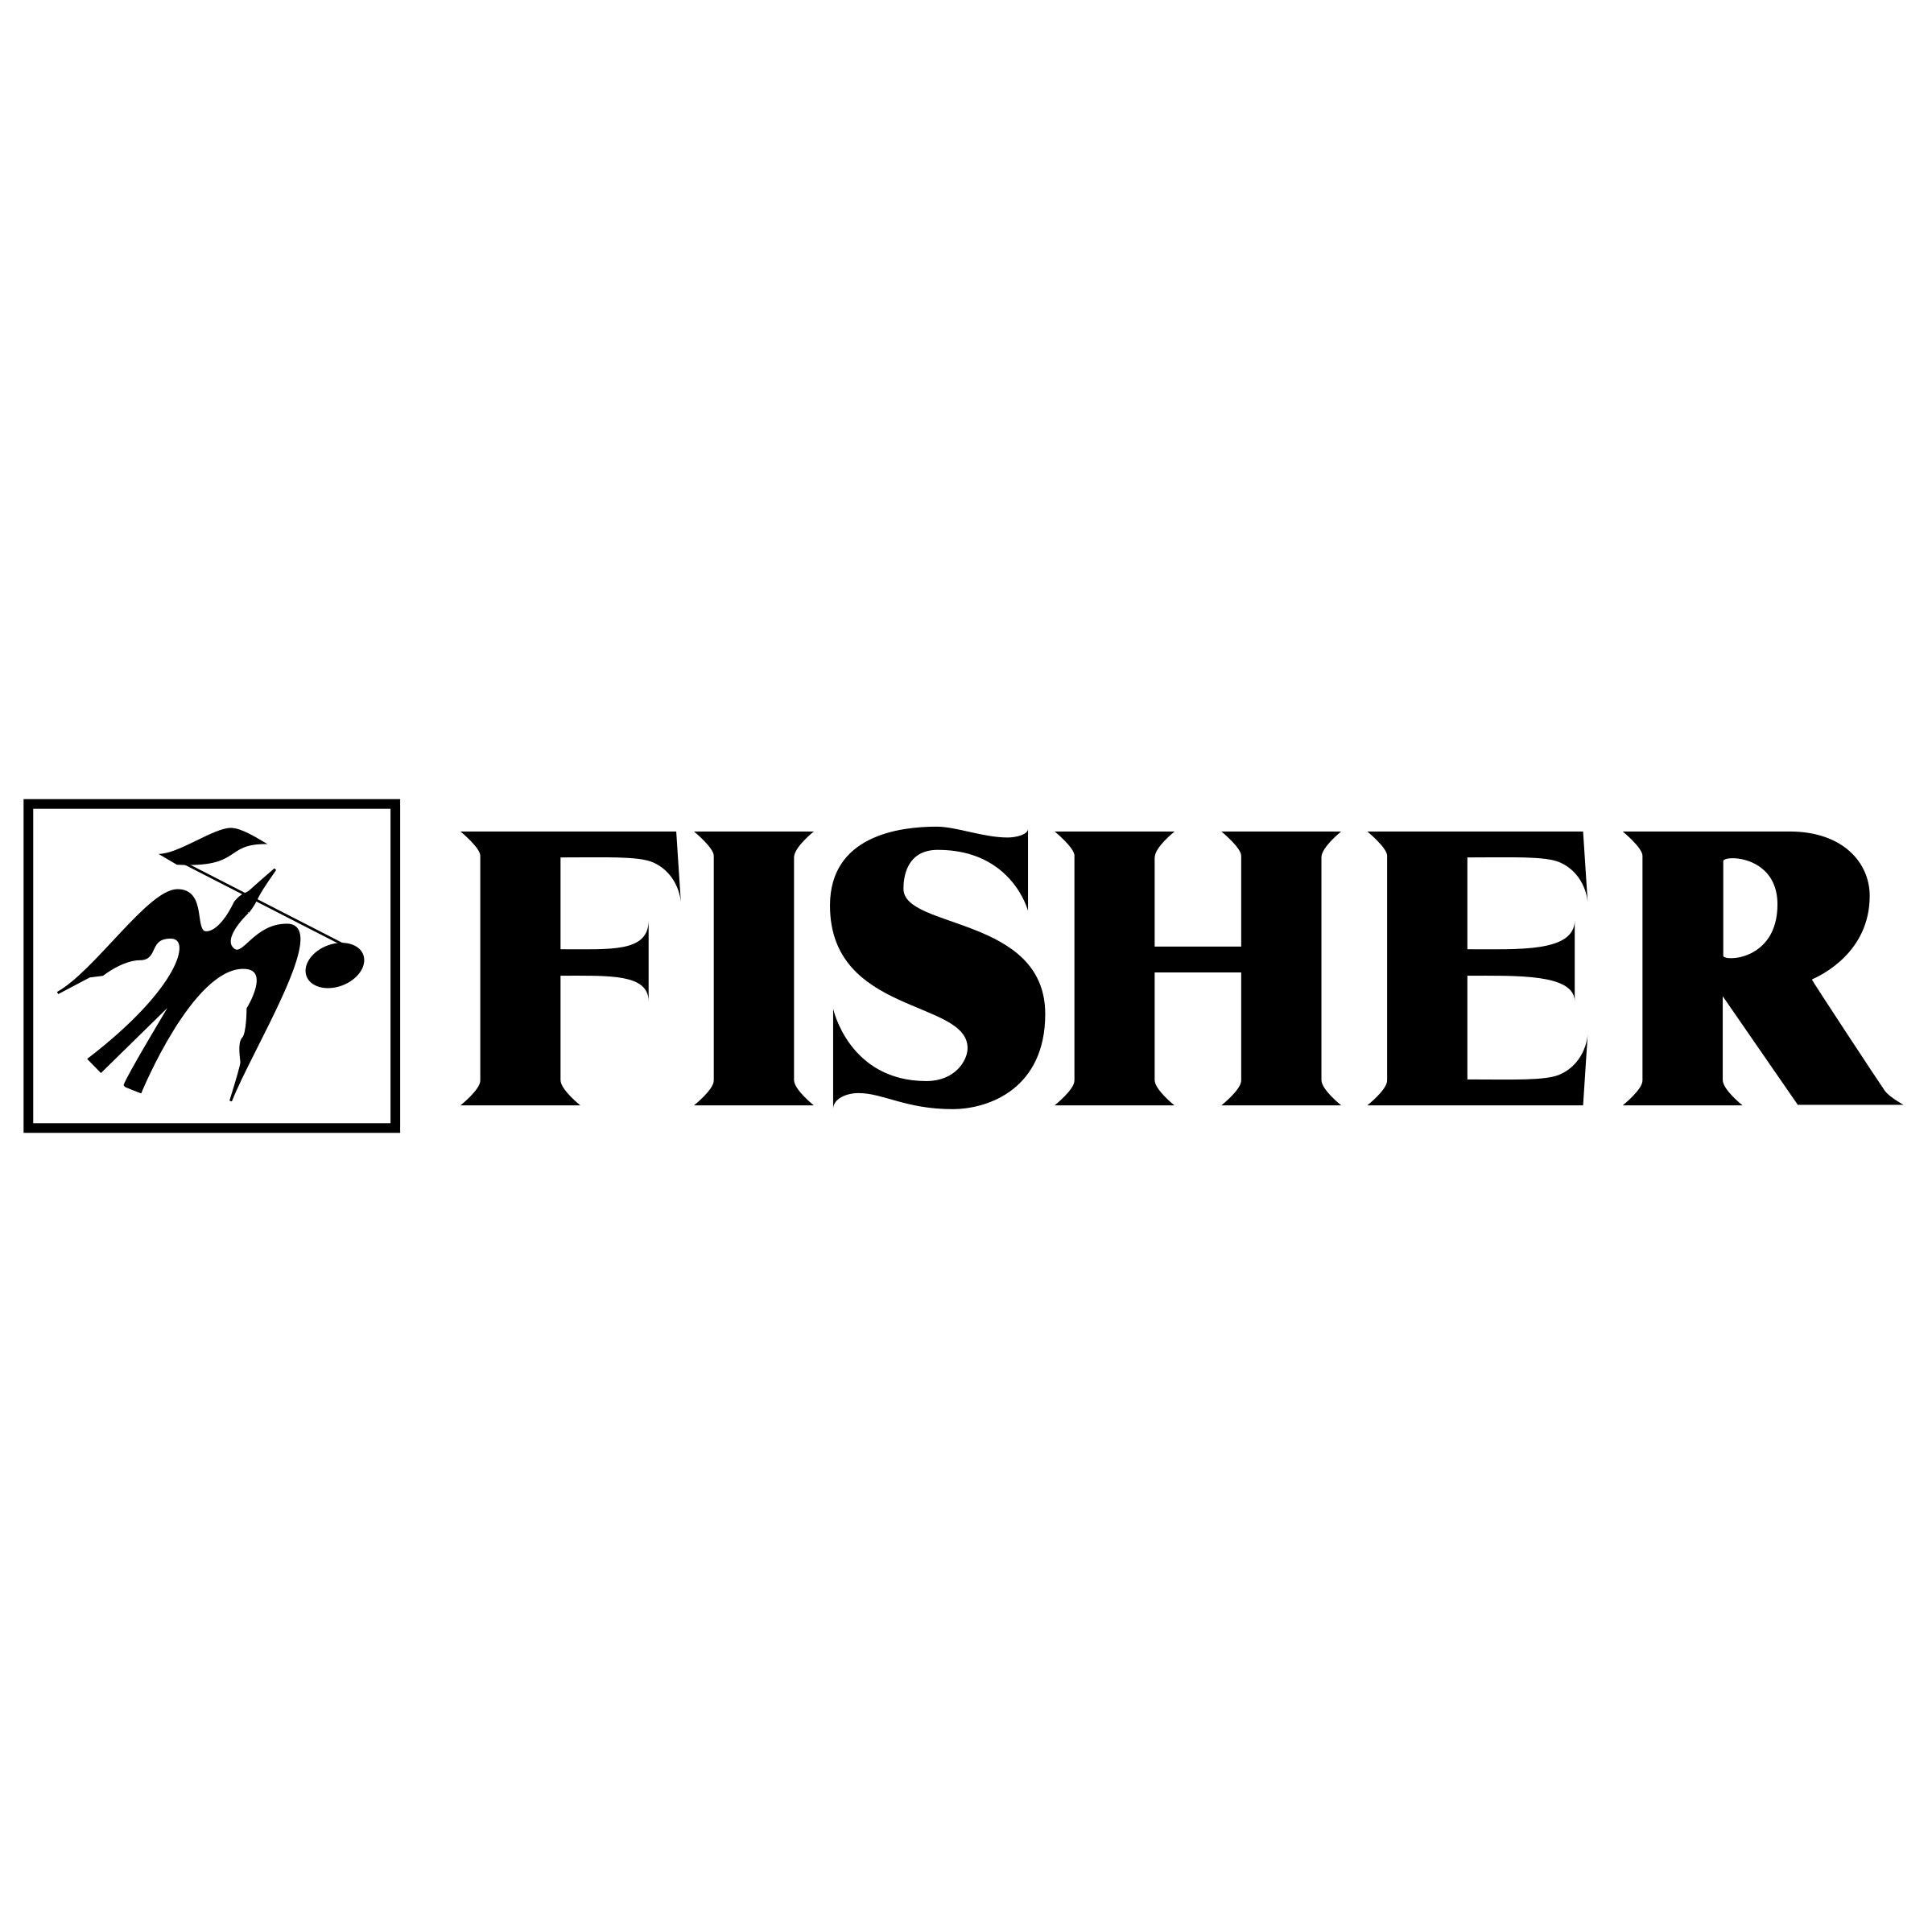 Fisher Logo - Fisher Logo PNG Transparent & SVG Vector - Freebie Supply